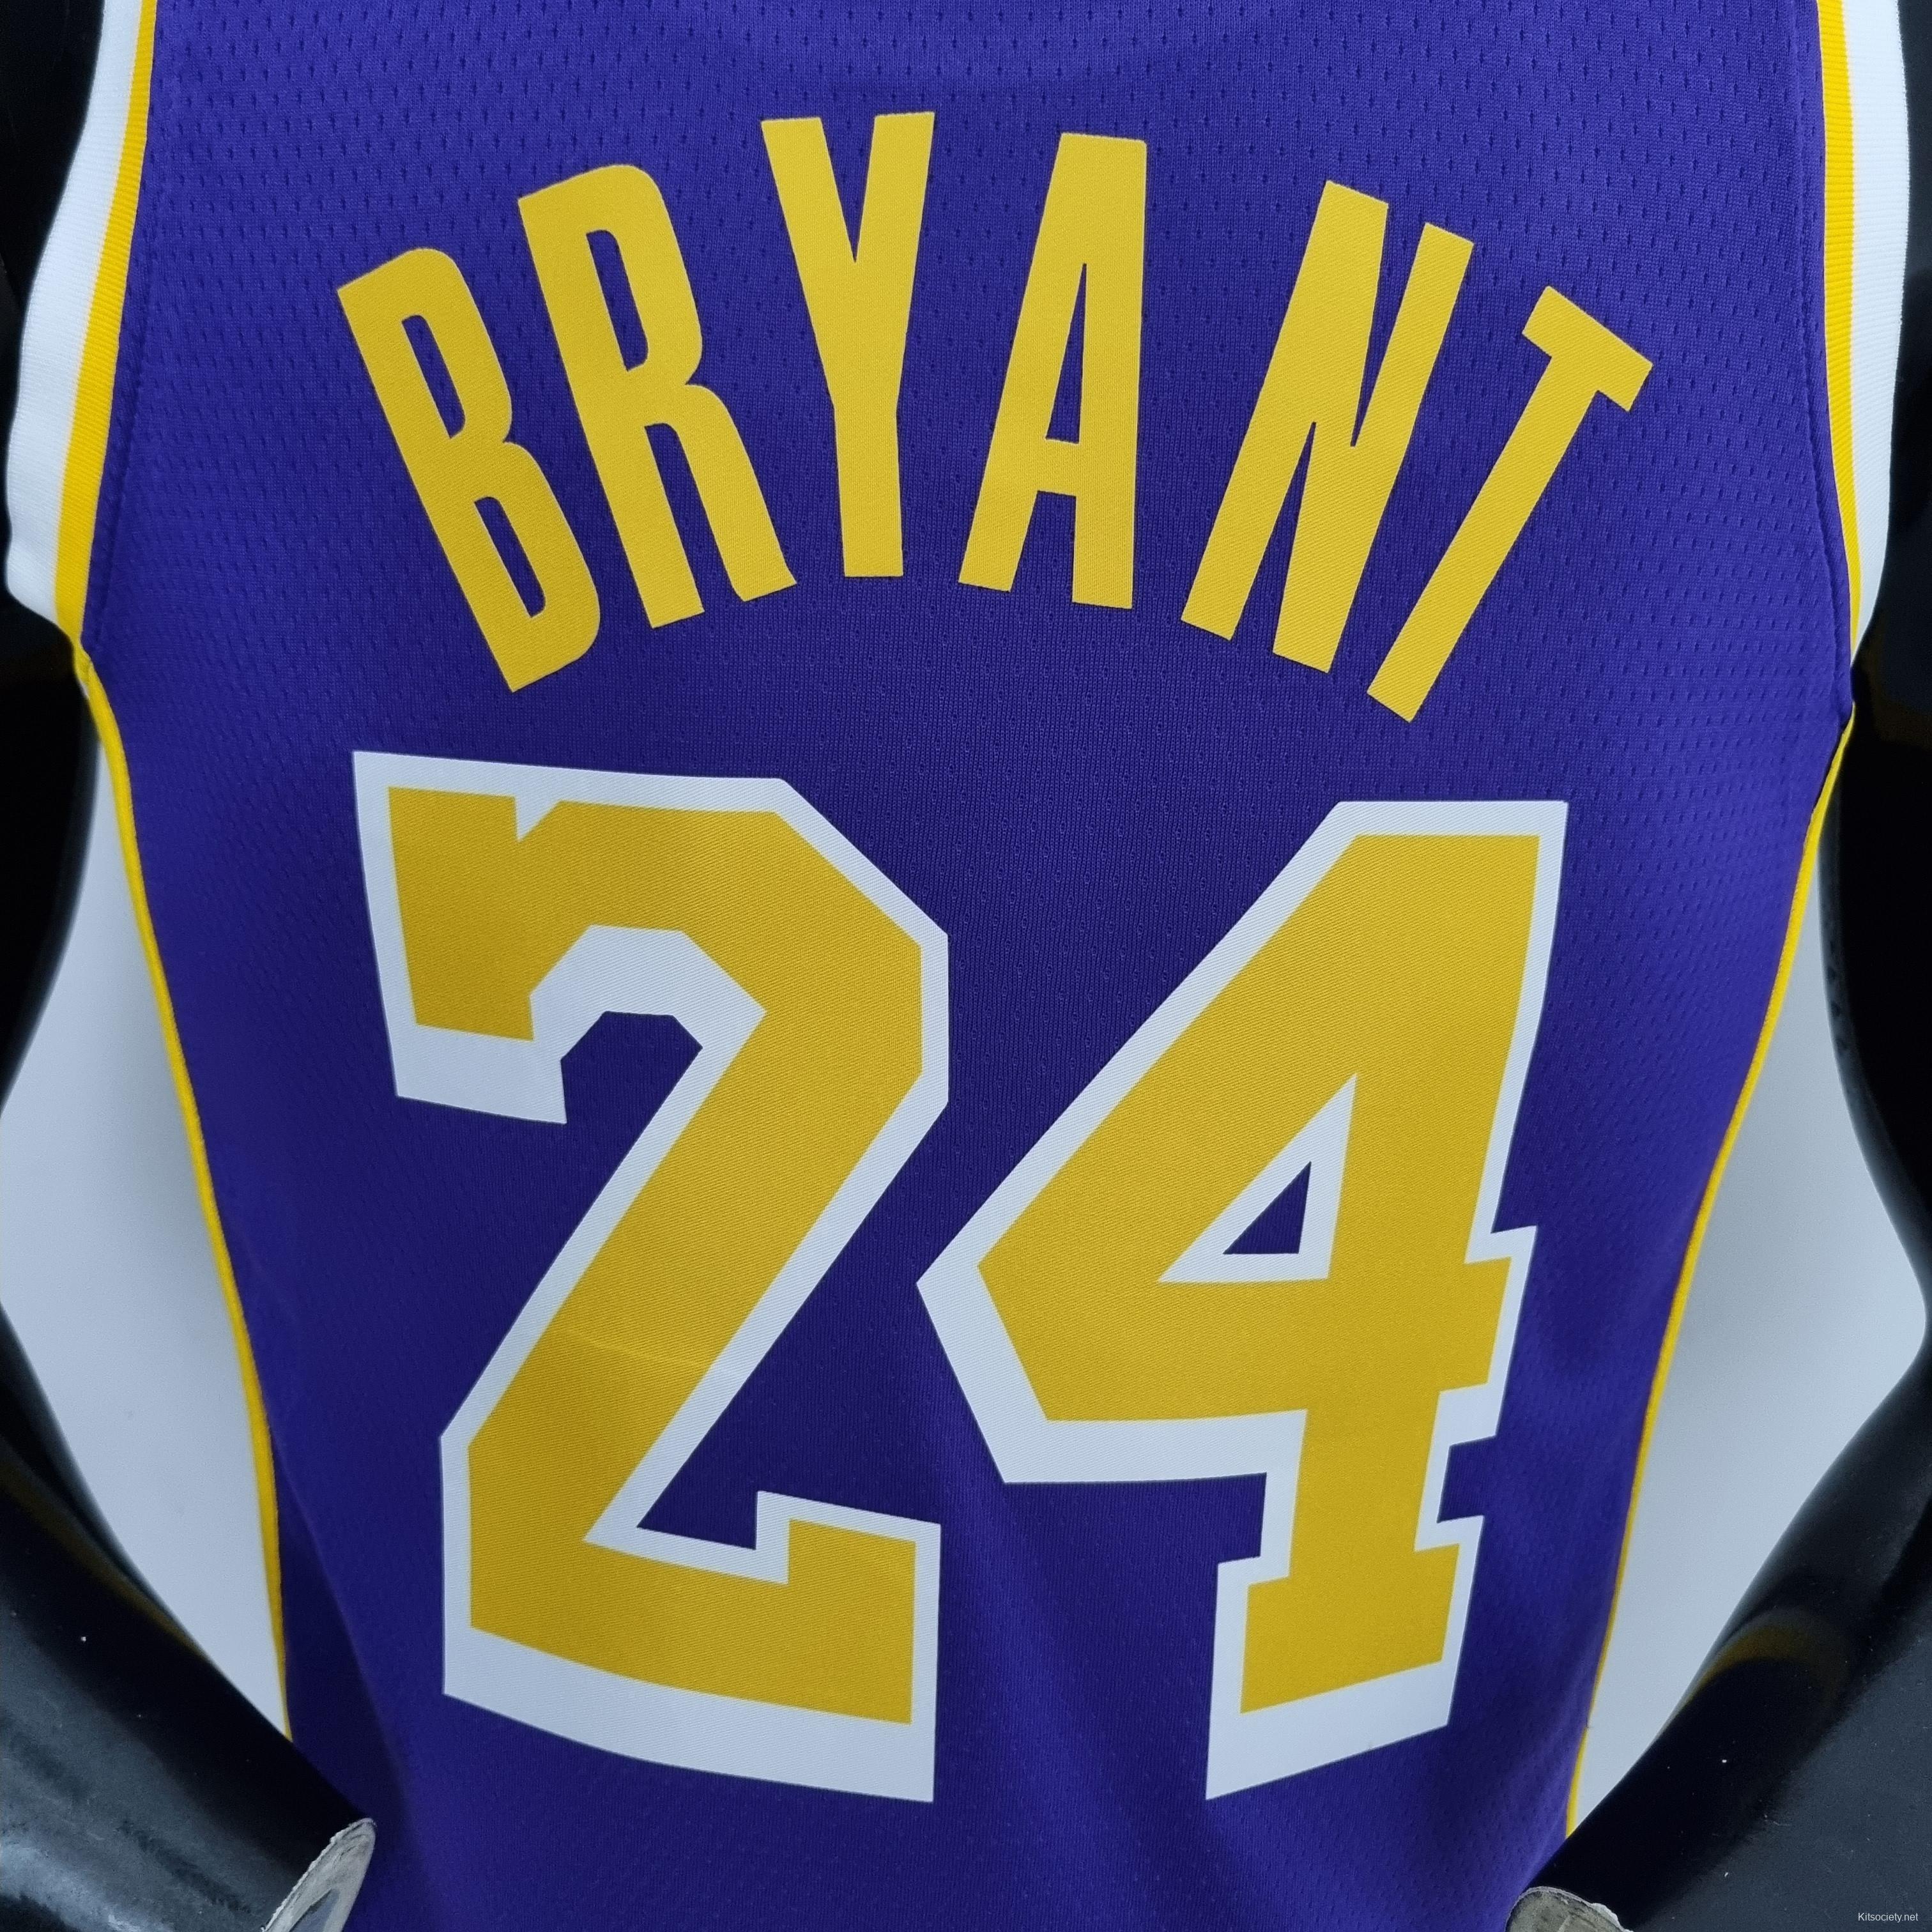 75th Anniversary BRYANT#24 Los Angeles Lakers Jordan Purple NBA Jersey -  Kitsociety